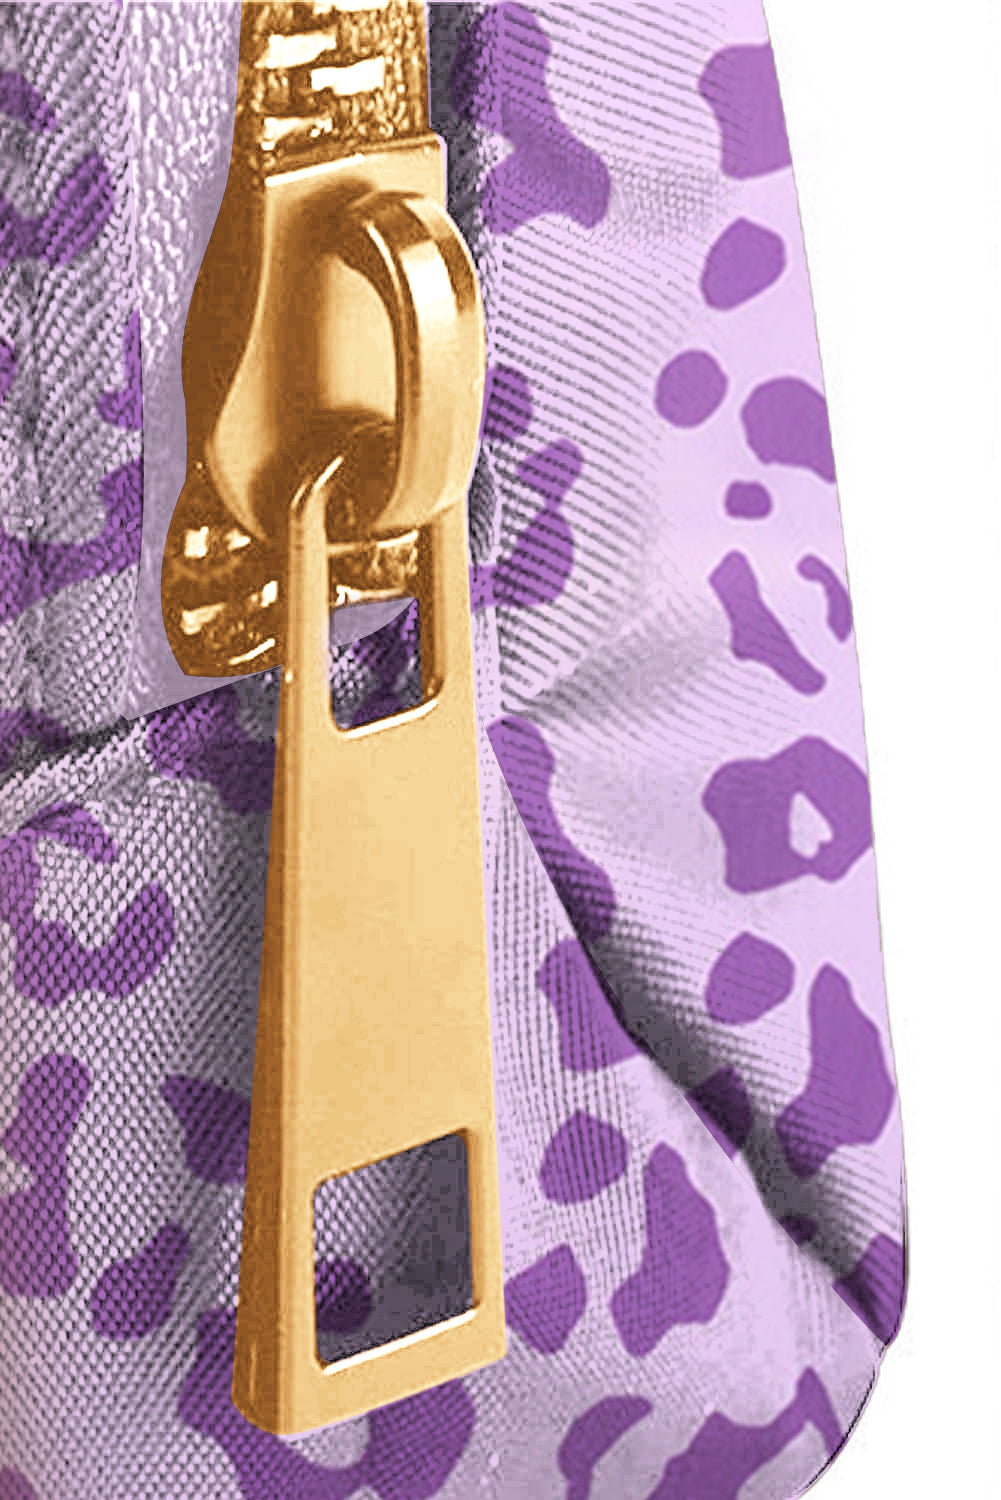 20*5*14cm Leopard Print Buckle Canvas Waist Pack Belt Bag